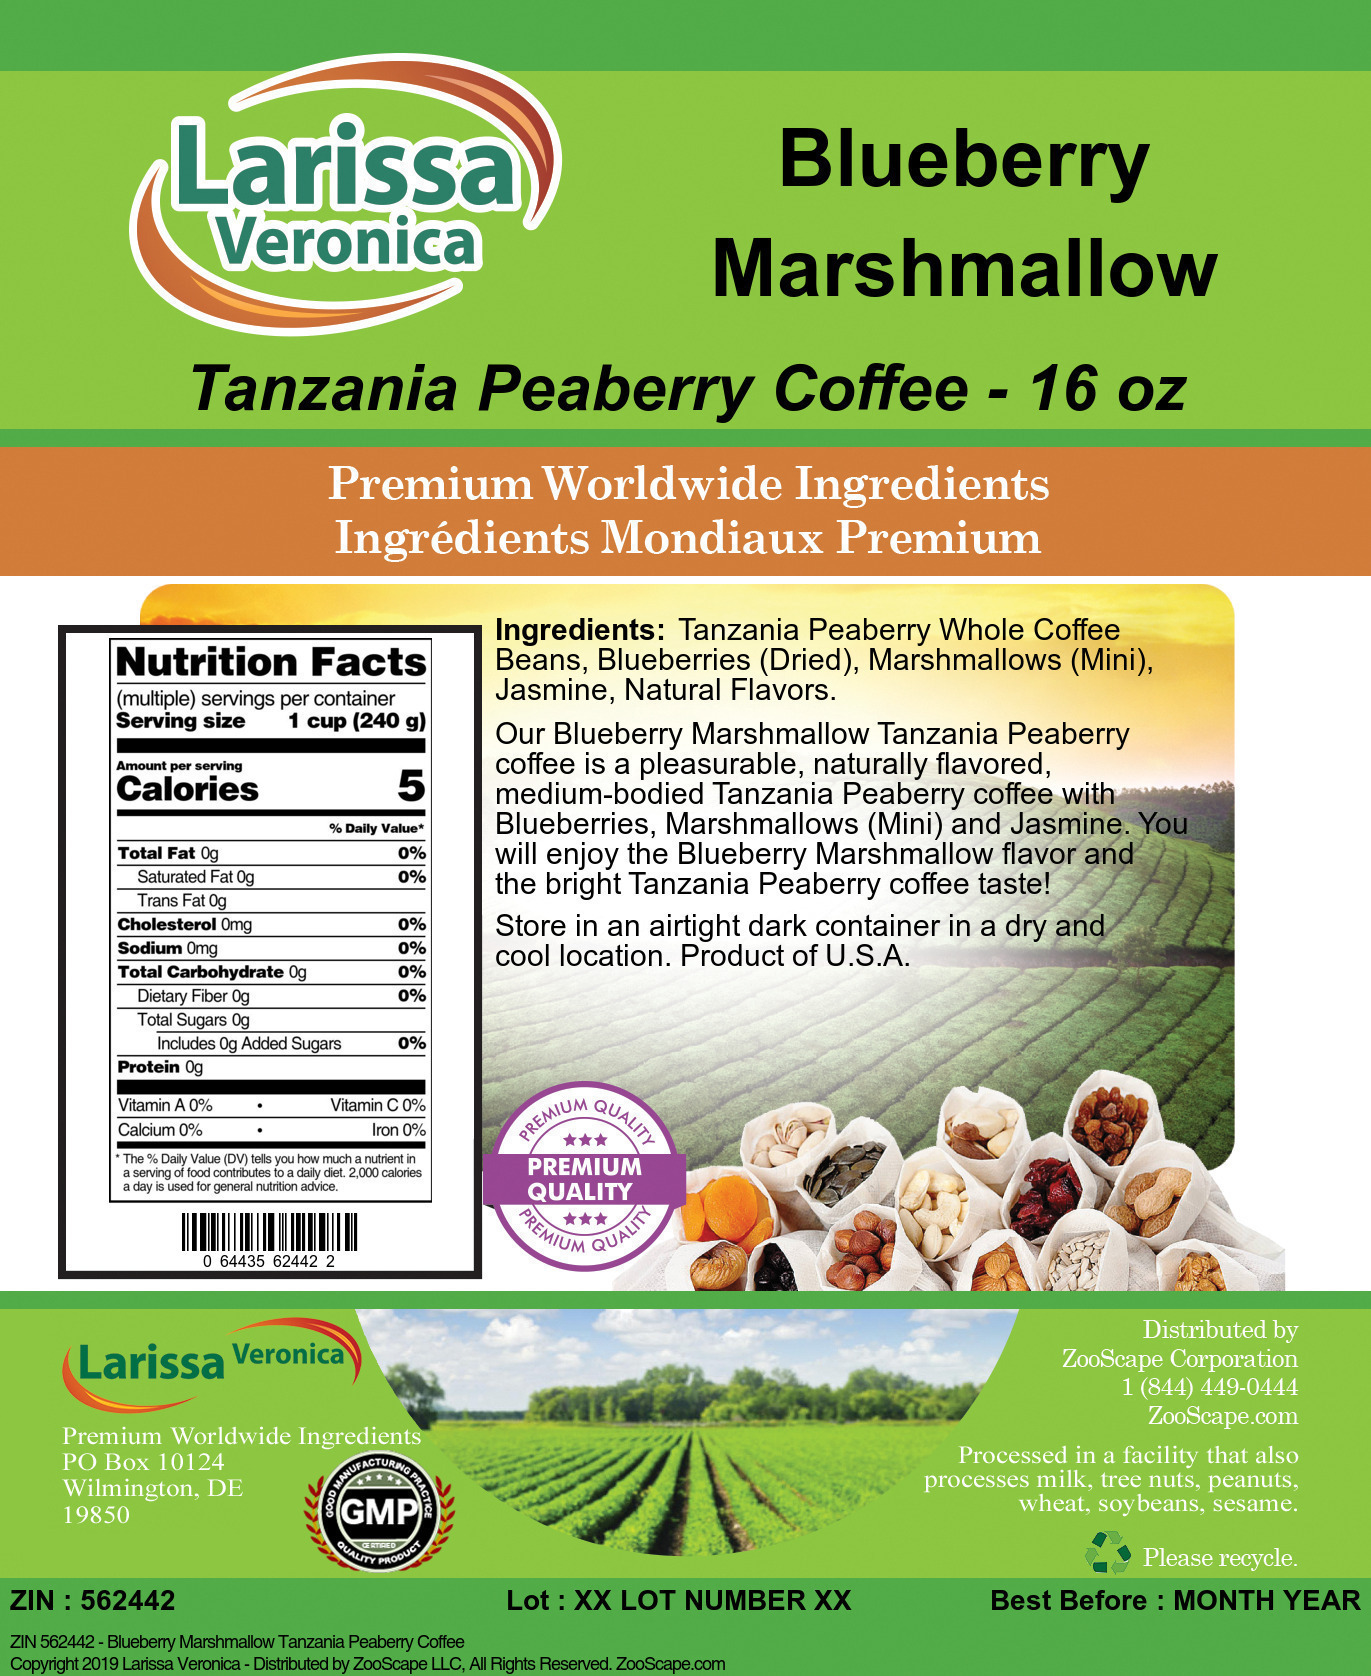 Blueberry Marshmallow Tanzania Peaberry Coffee - Label